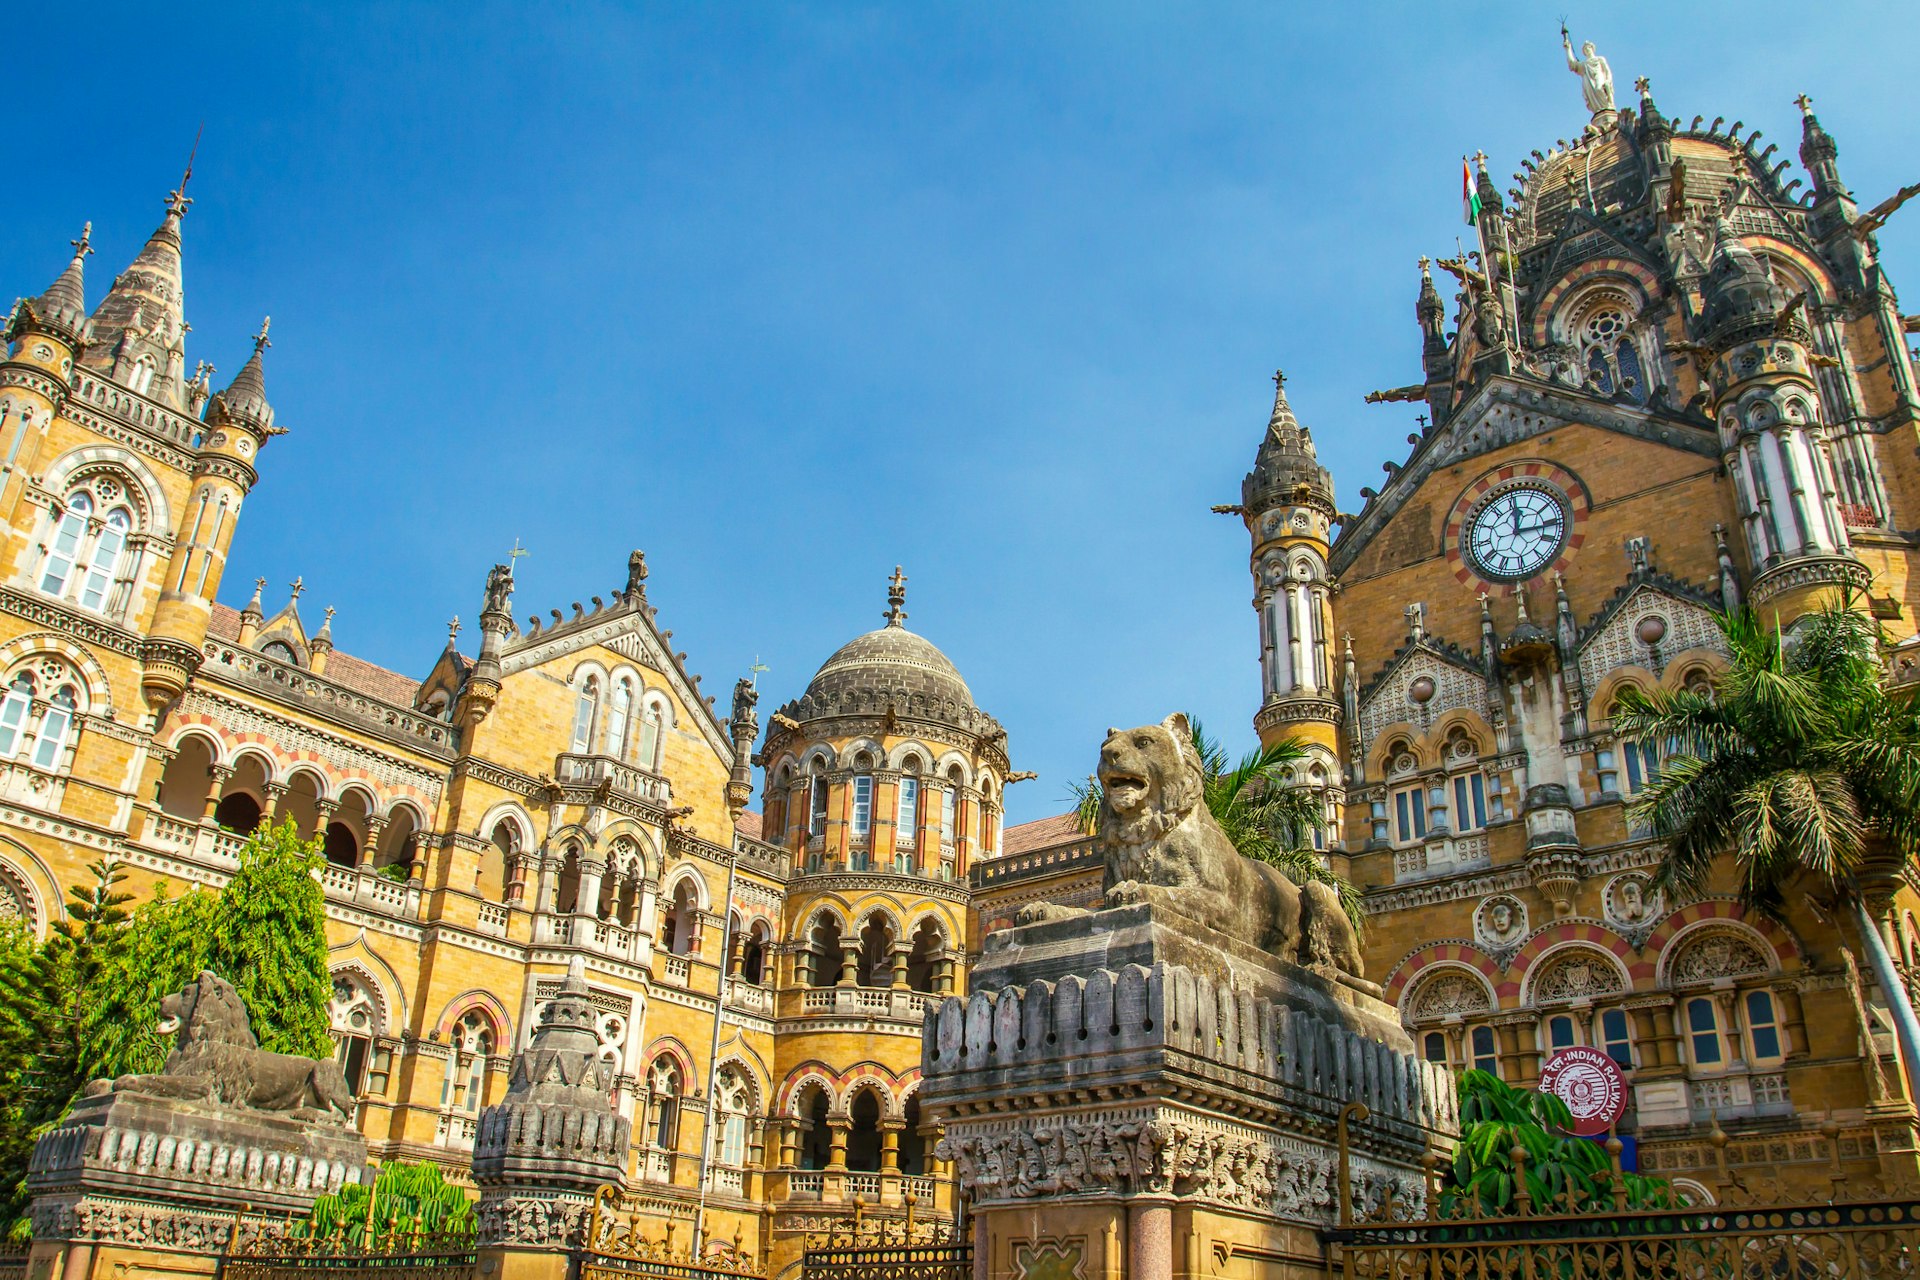 The ornate frontage of Mumbai's Chhatrapati Shivaji Maharaj terminus © Alexander Mazurkevich / Shutterstock